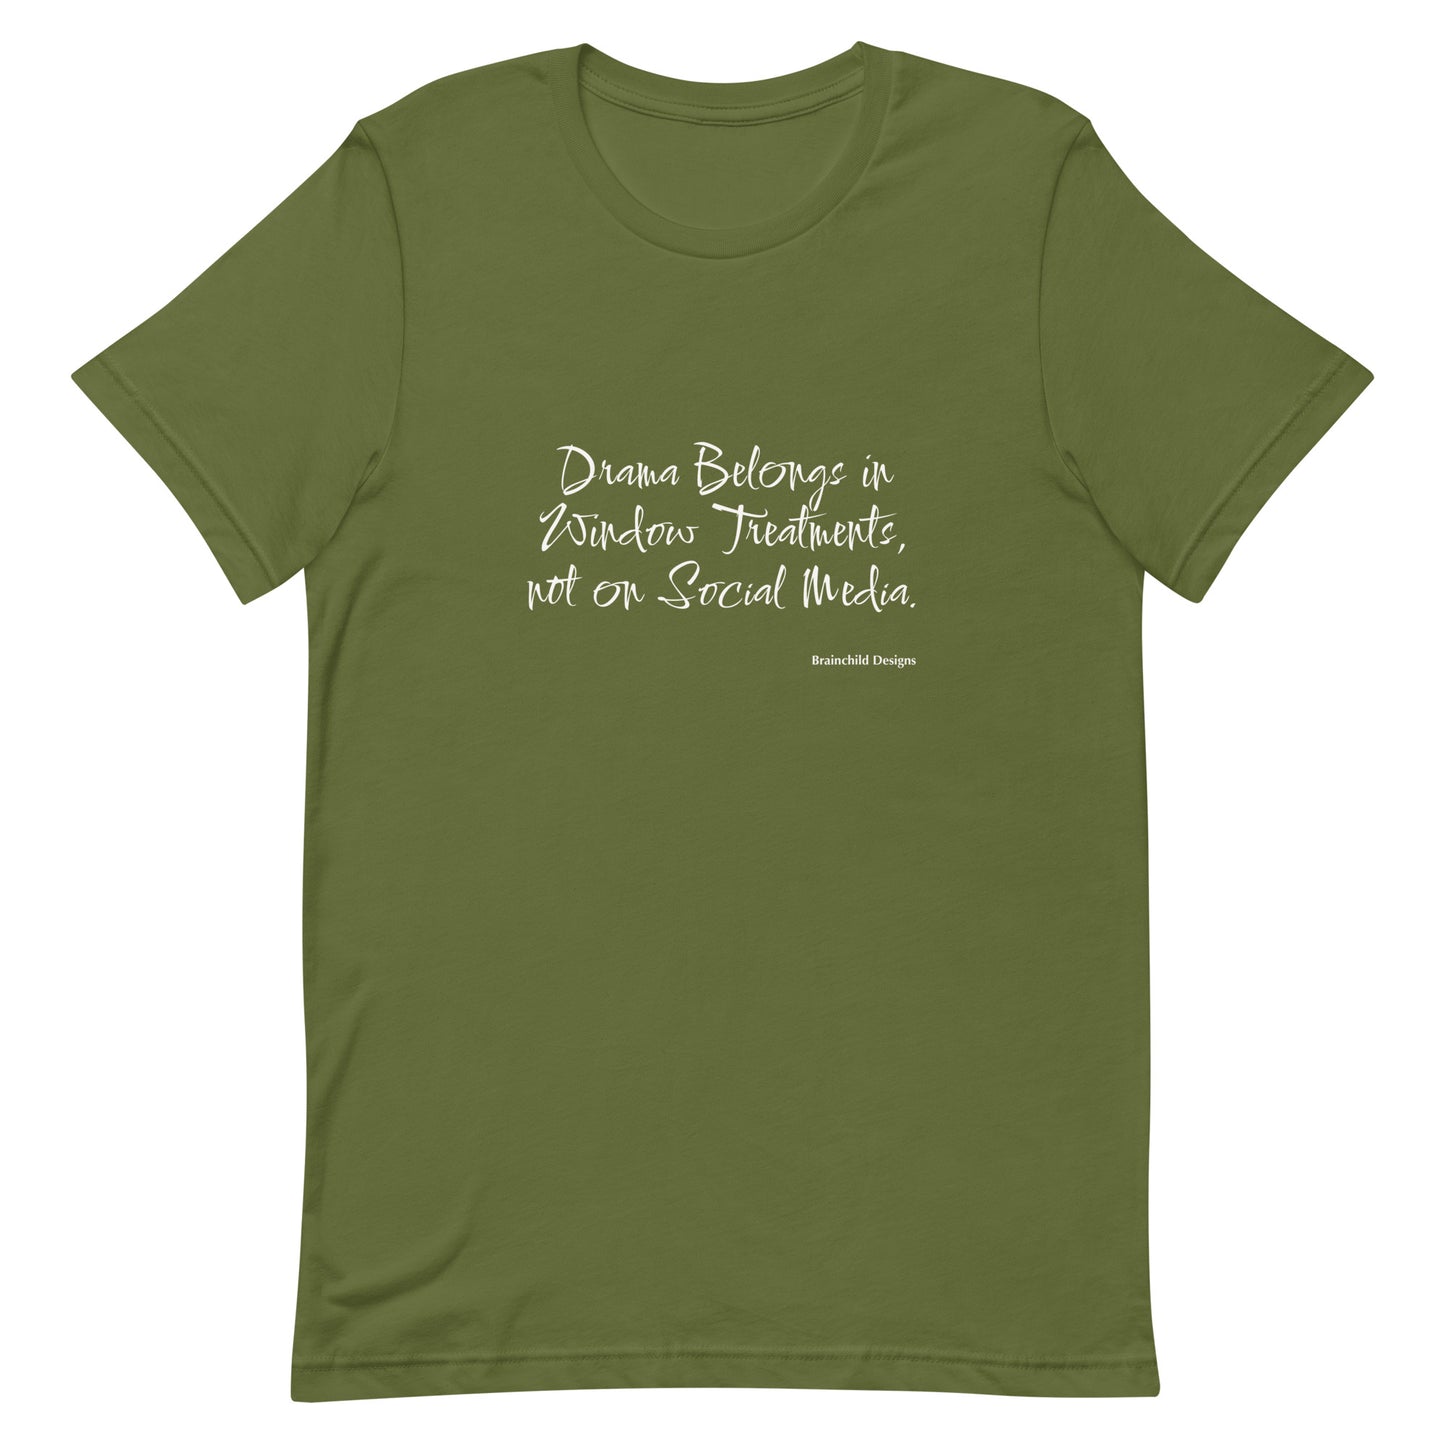 Drama belongs in Window Treatments, not Social Media -Adult Unisex t-shirt - Brainchild Designs